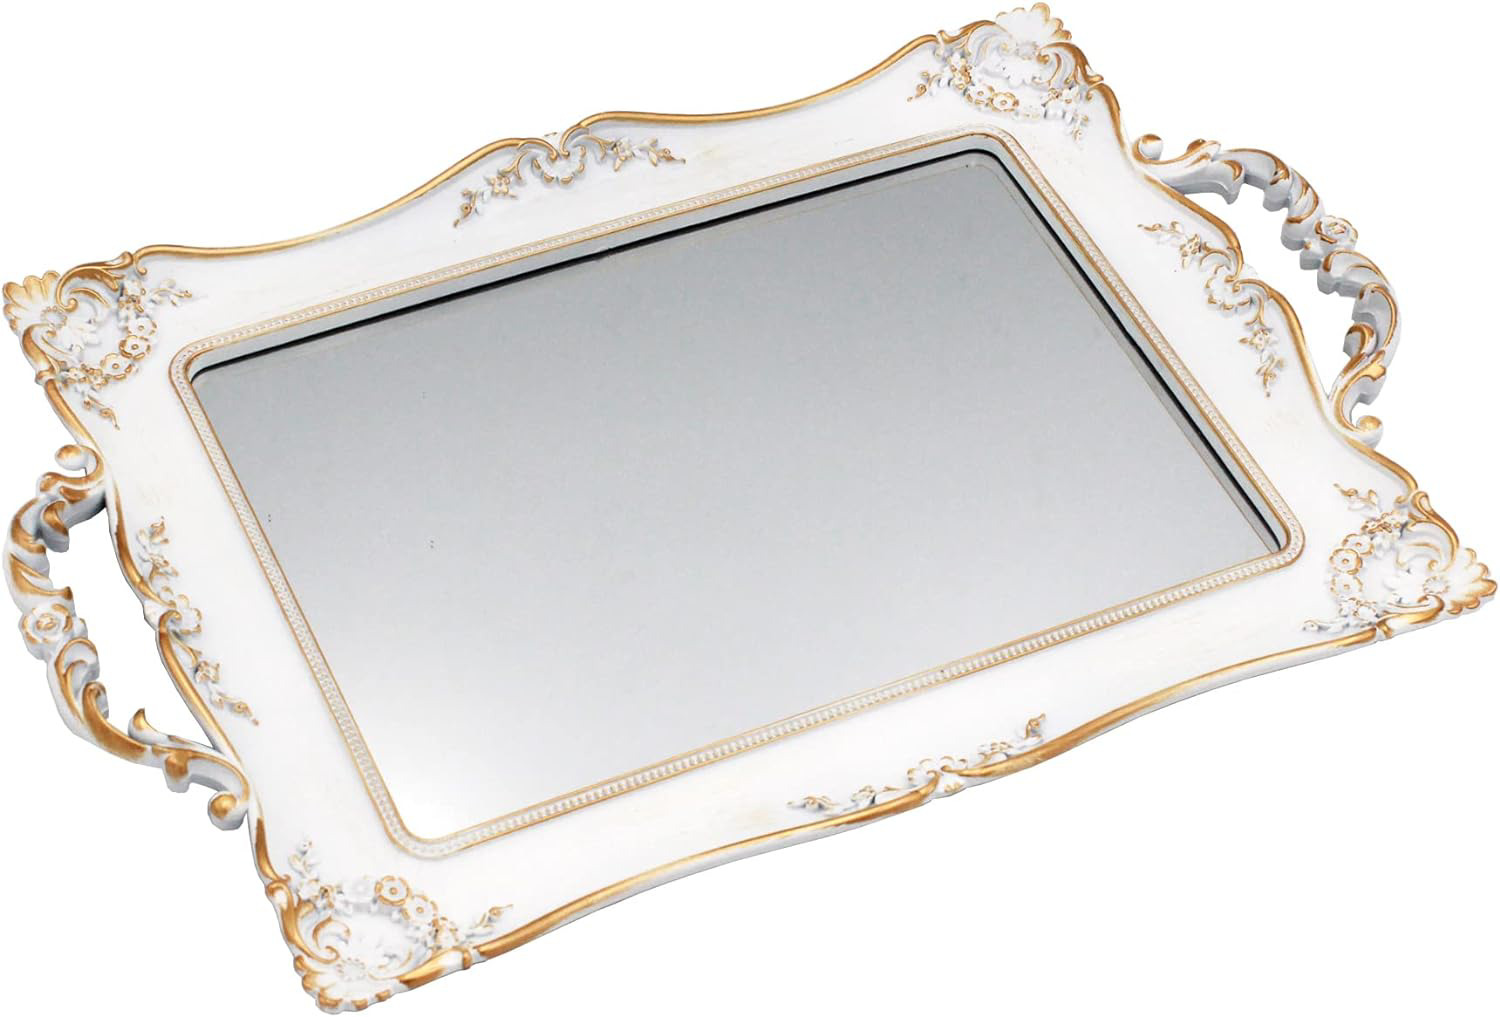 Tstarer Antique Decorative Gold Framed Square Mirror Tray, Jewelry & Cosmetics O